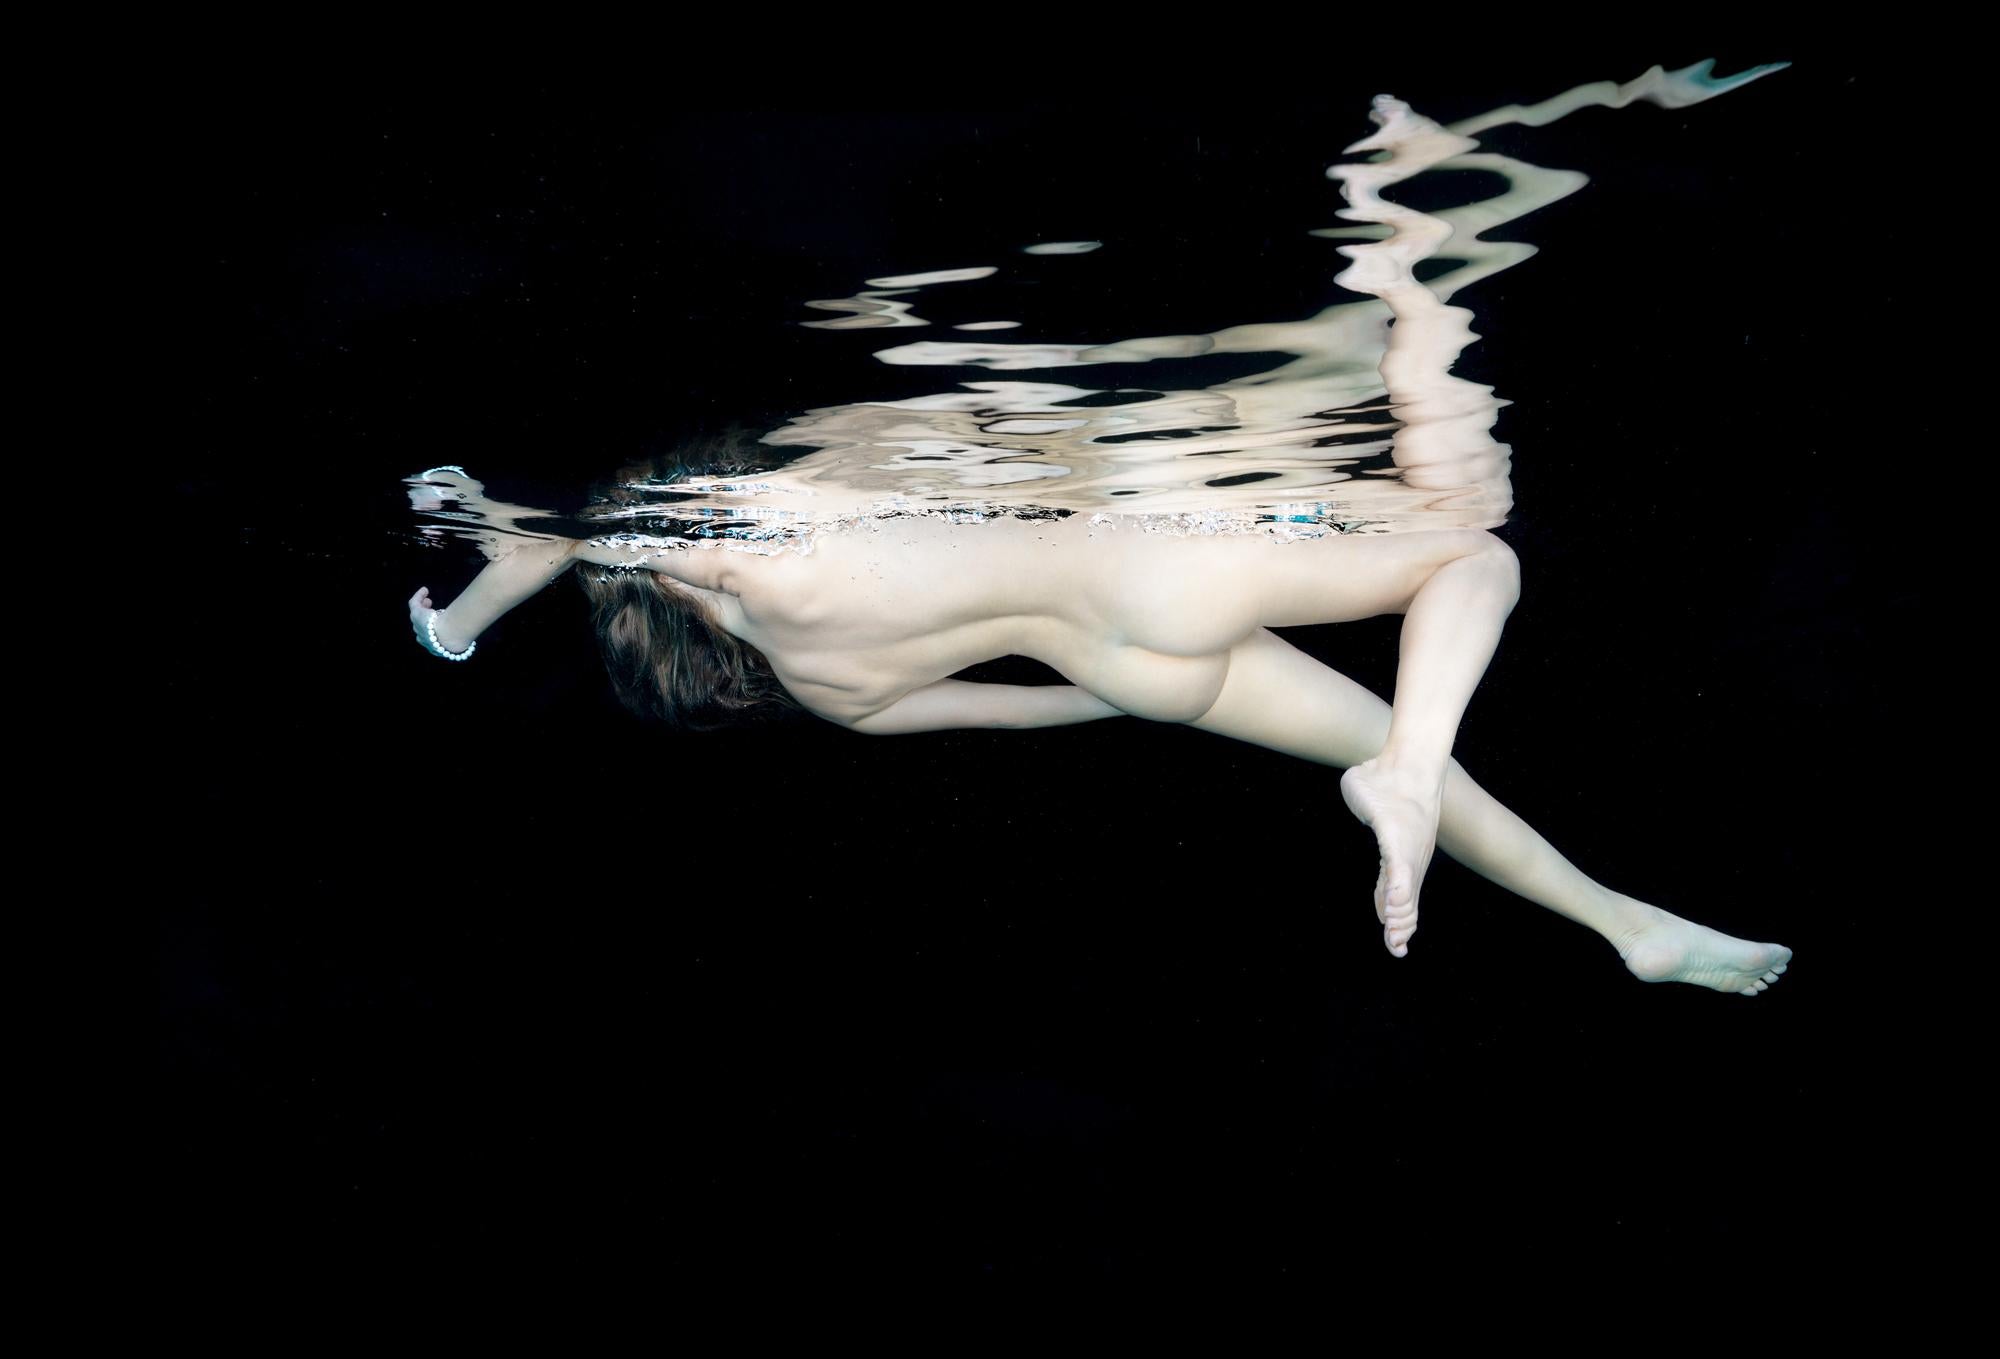 Porcelain II  - underwater nude photograph - archival pigment print 23x35"